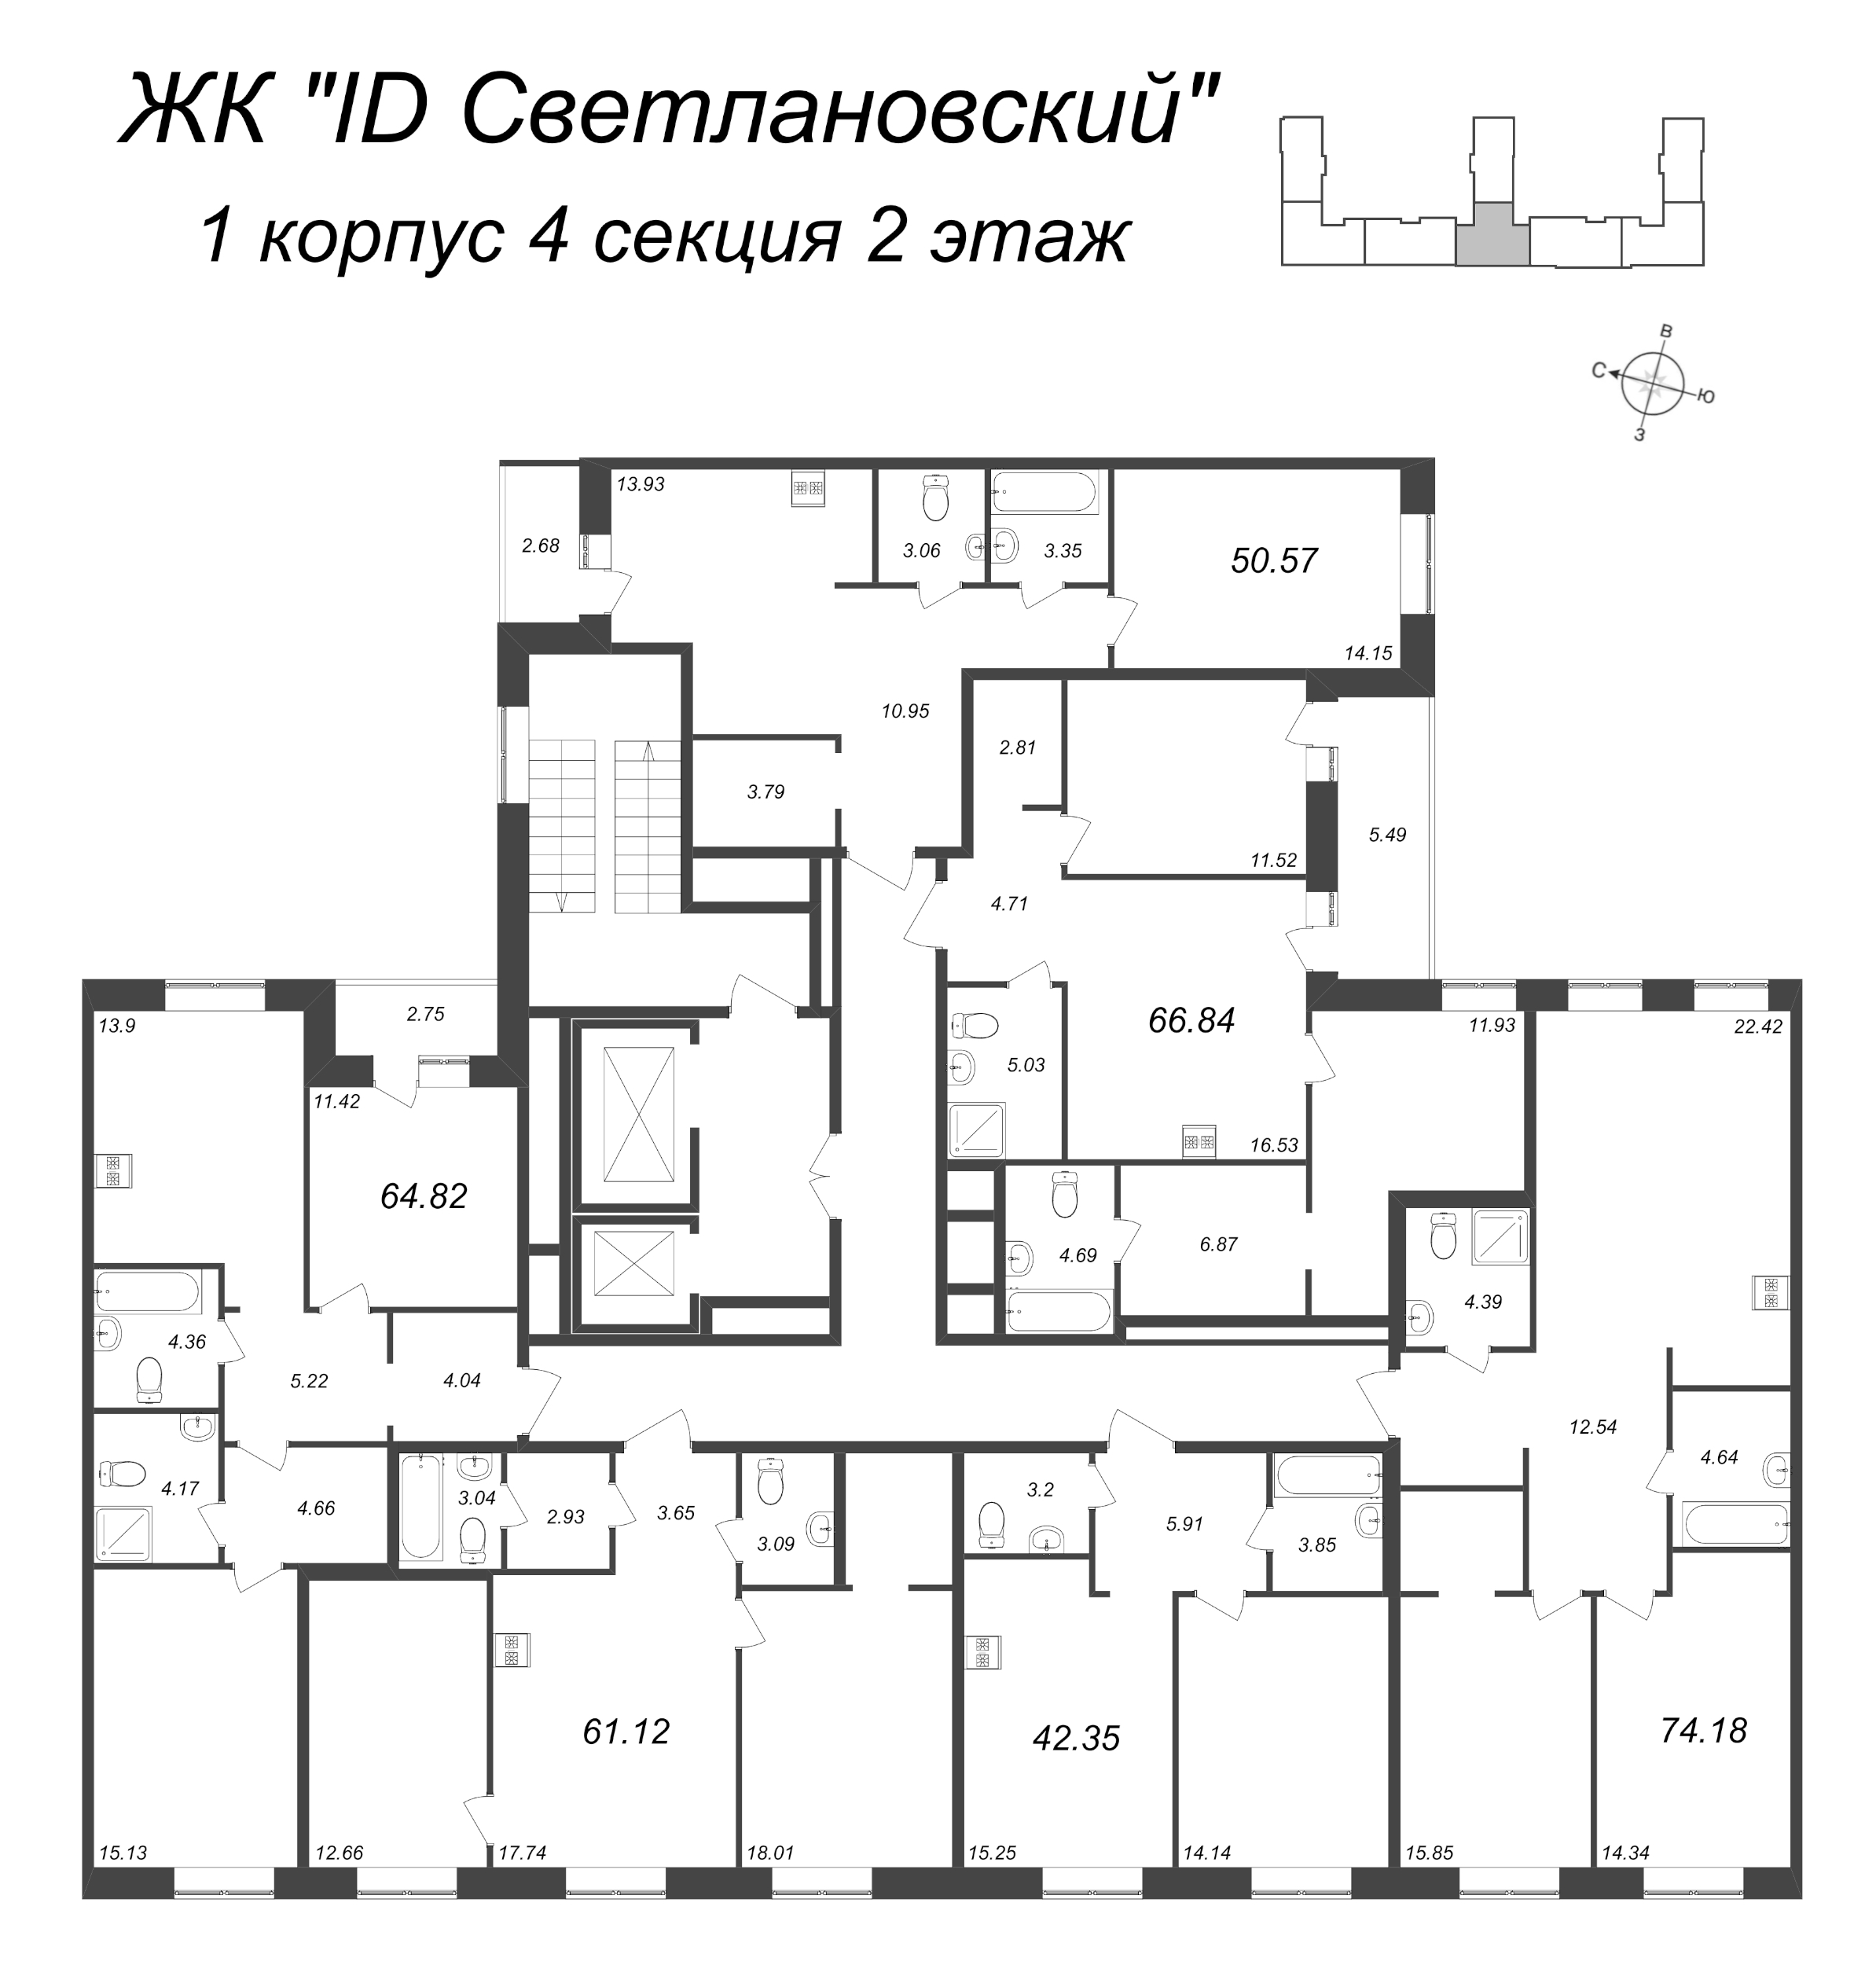 3-комнатная (Евро) квартира, 74.18 м² - планировка этажа